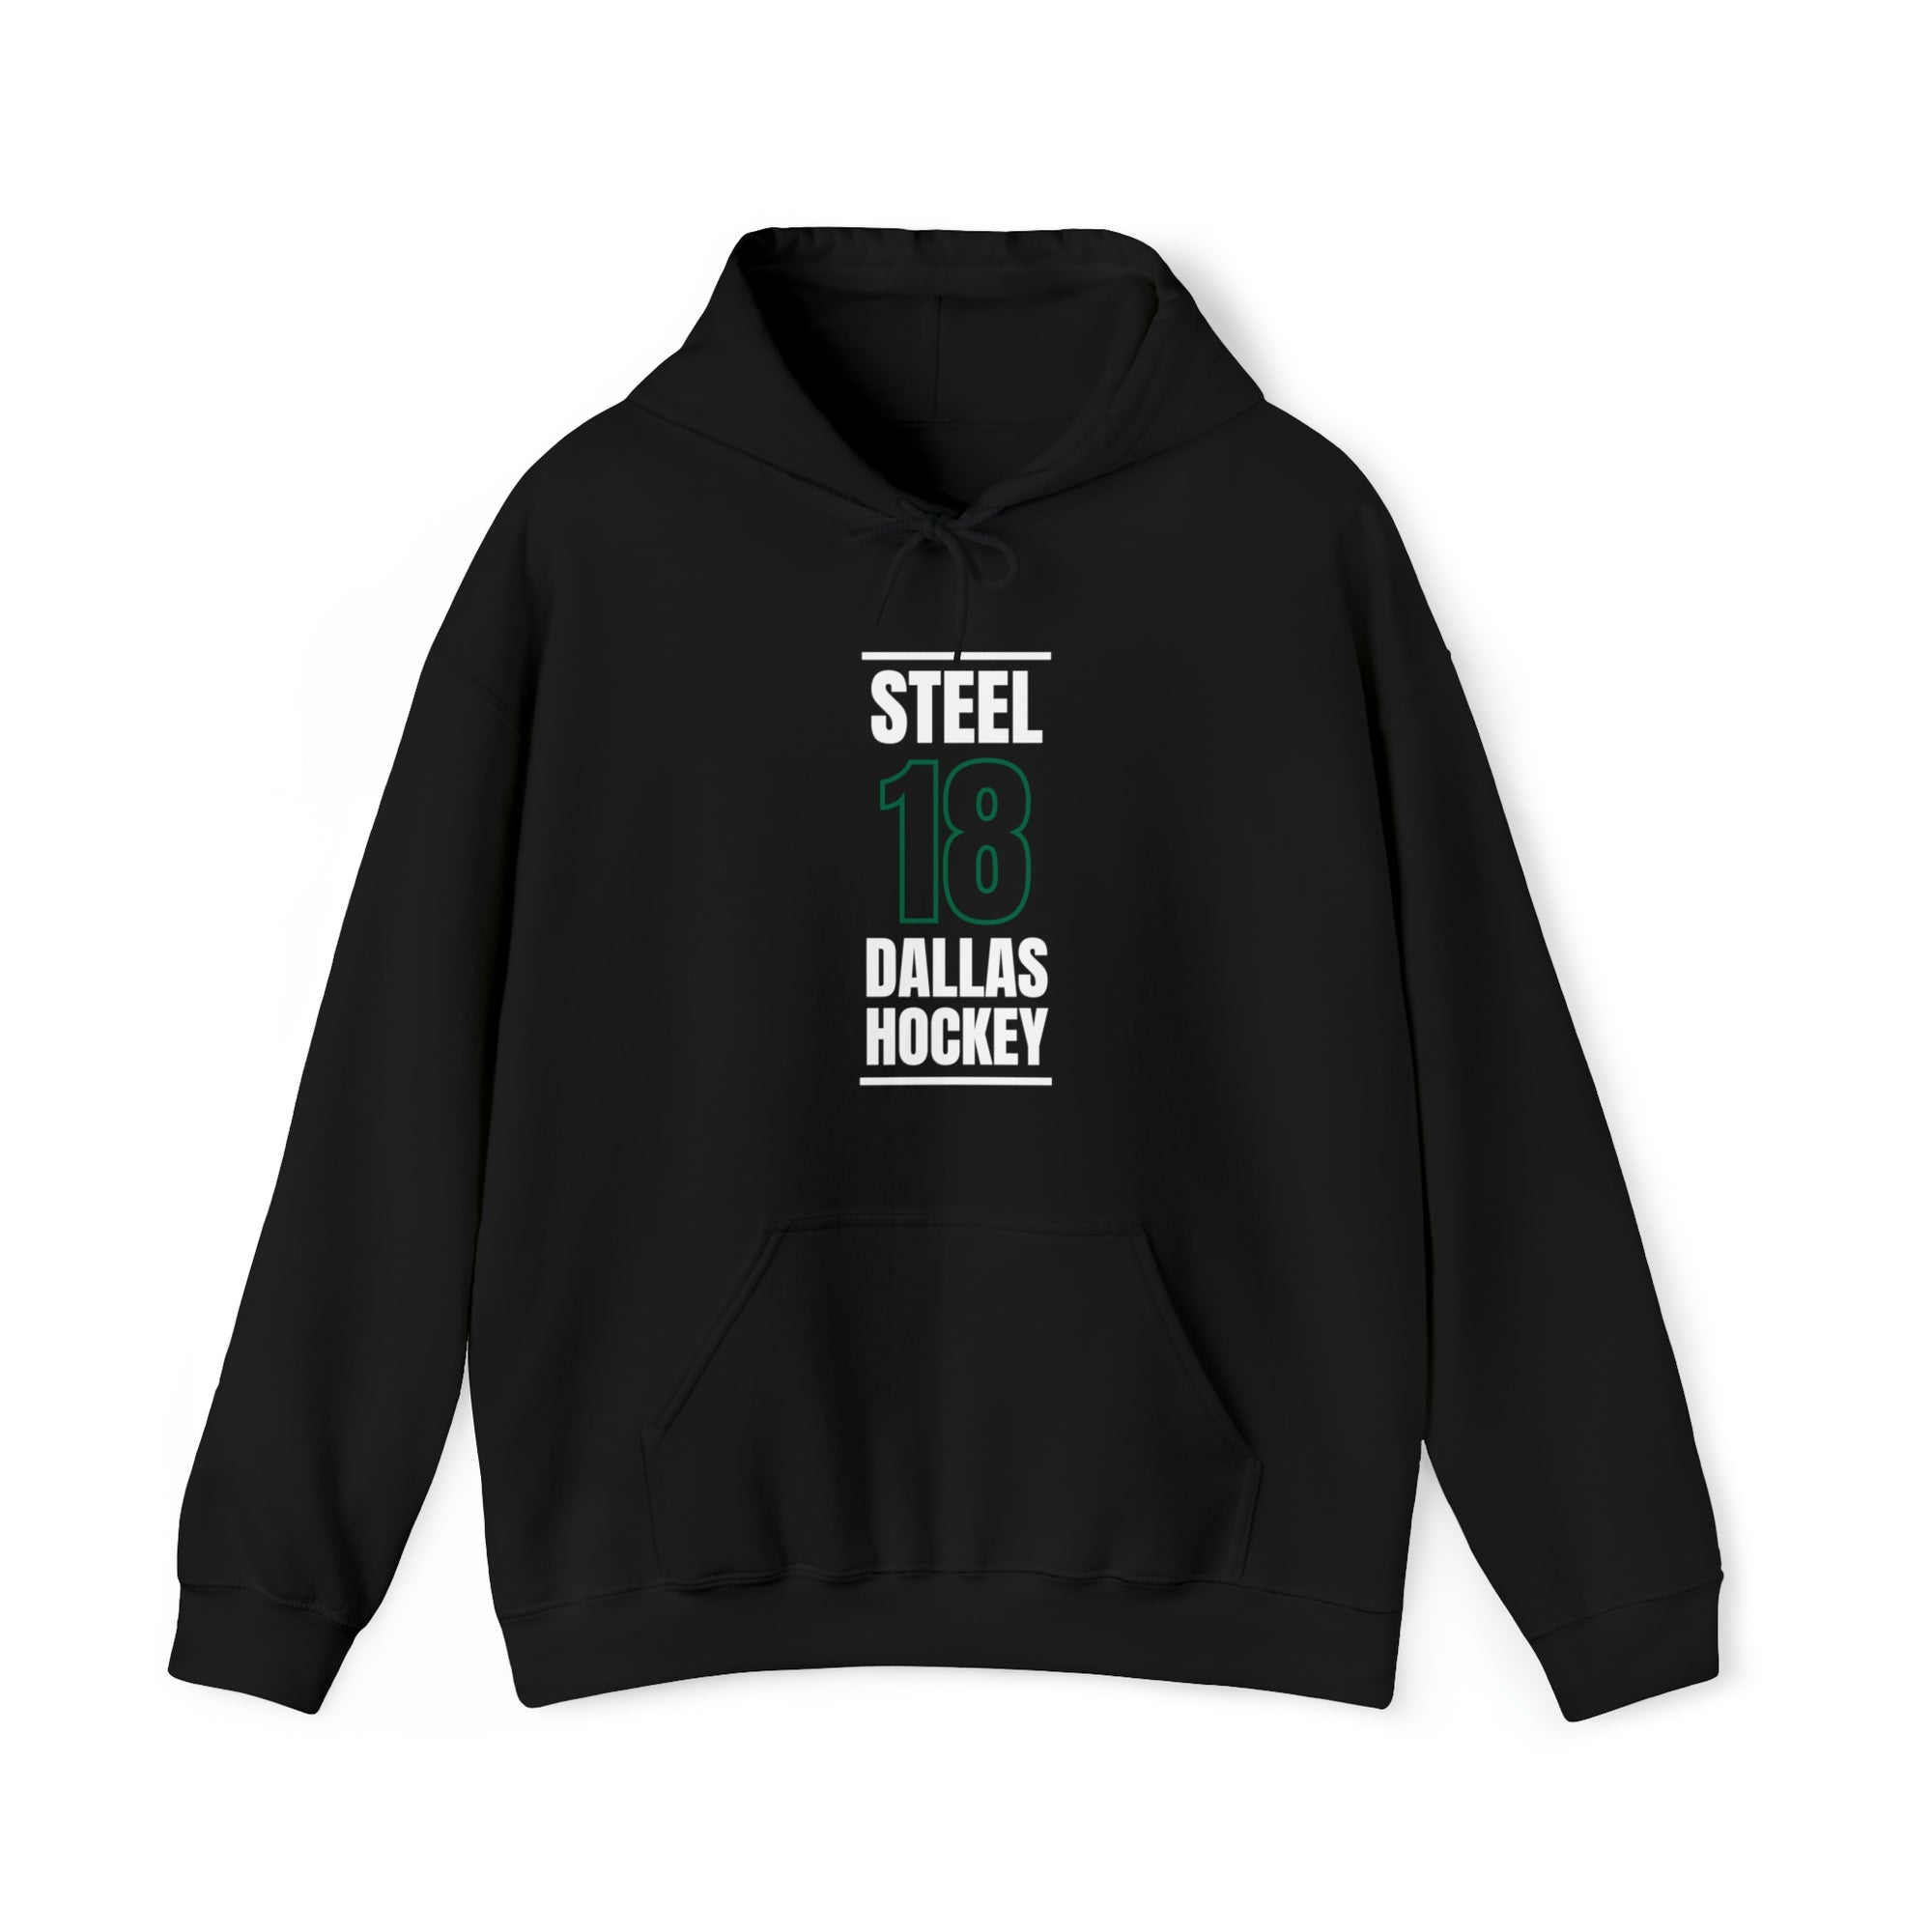 Steel 18 Dallas Hockey Black Vertical Design Unisex Hooded Sweatshirt